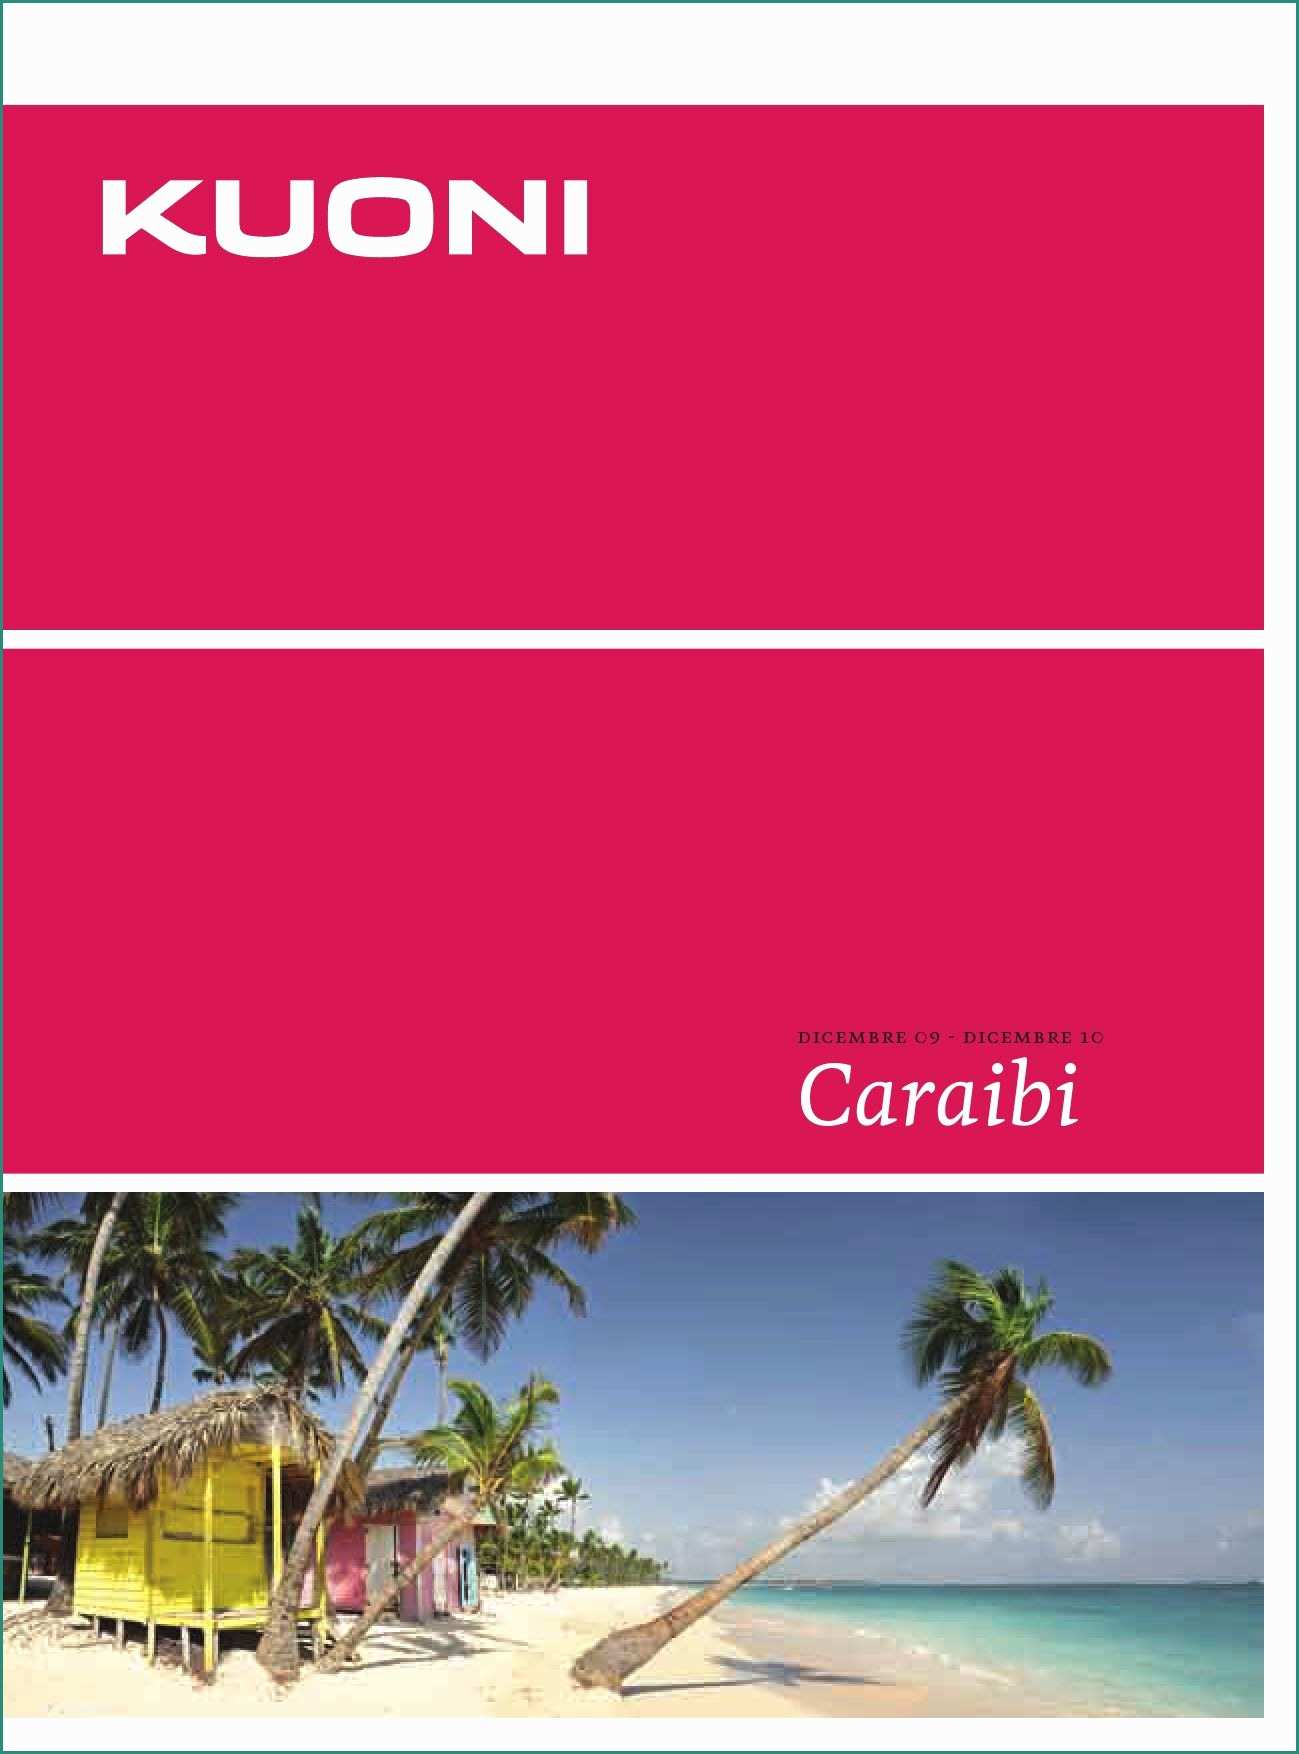 Misure Divano Posti Standard E Catalogo Viaggi Caraibi by Kuoni Italia Spa issuu